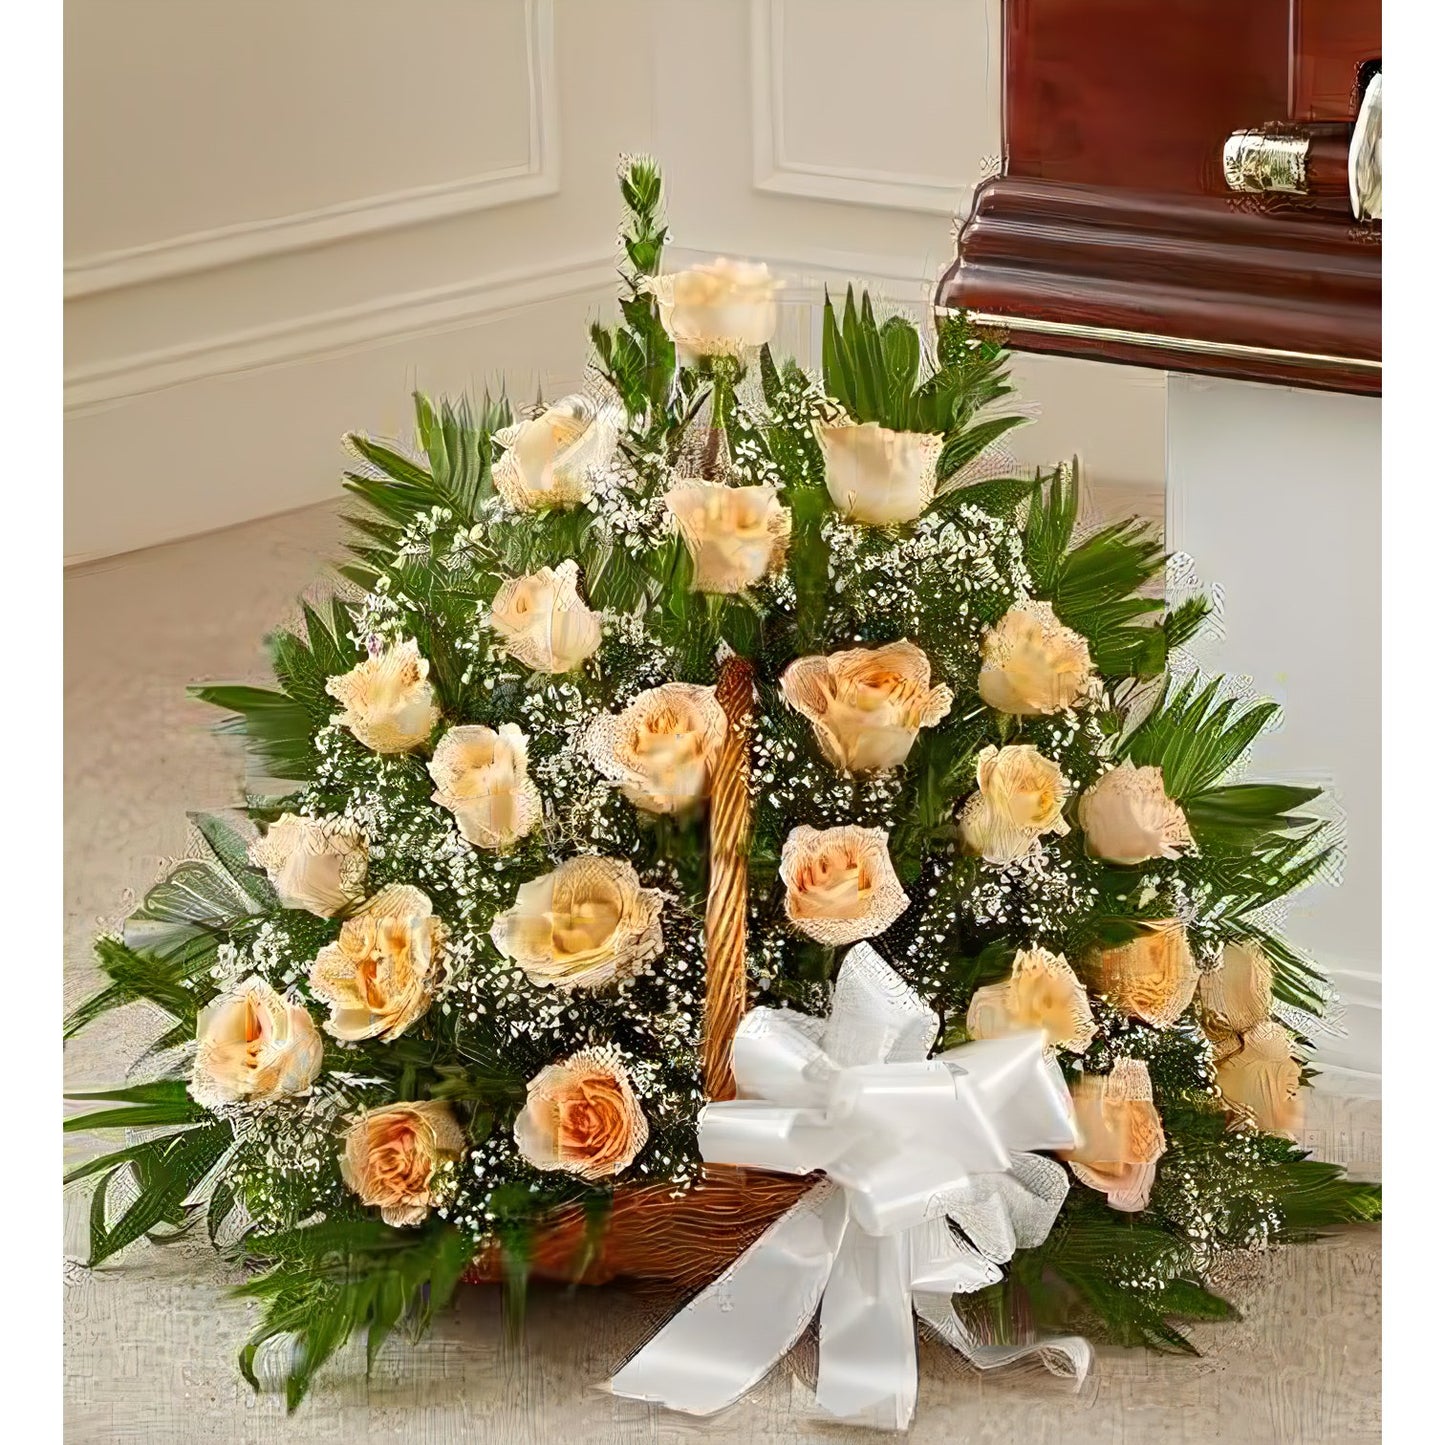 Sincerest Sympathy Fireside Basket - Funeral > For the Service - Queens Flower Delivery